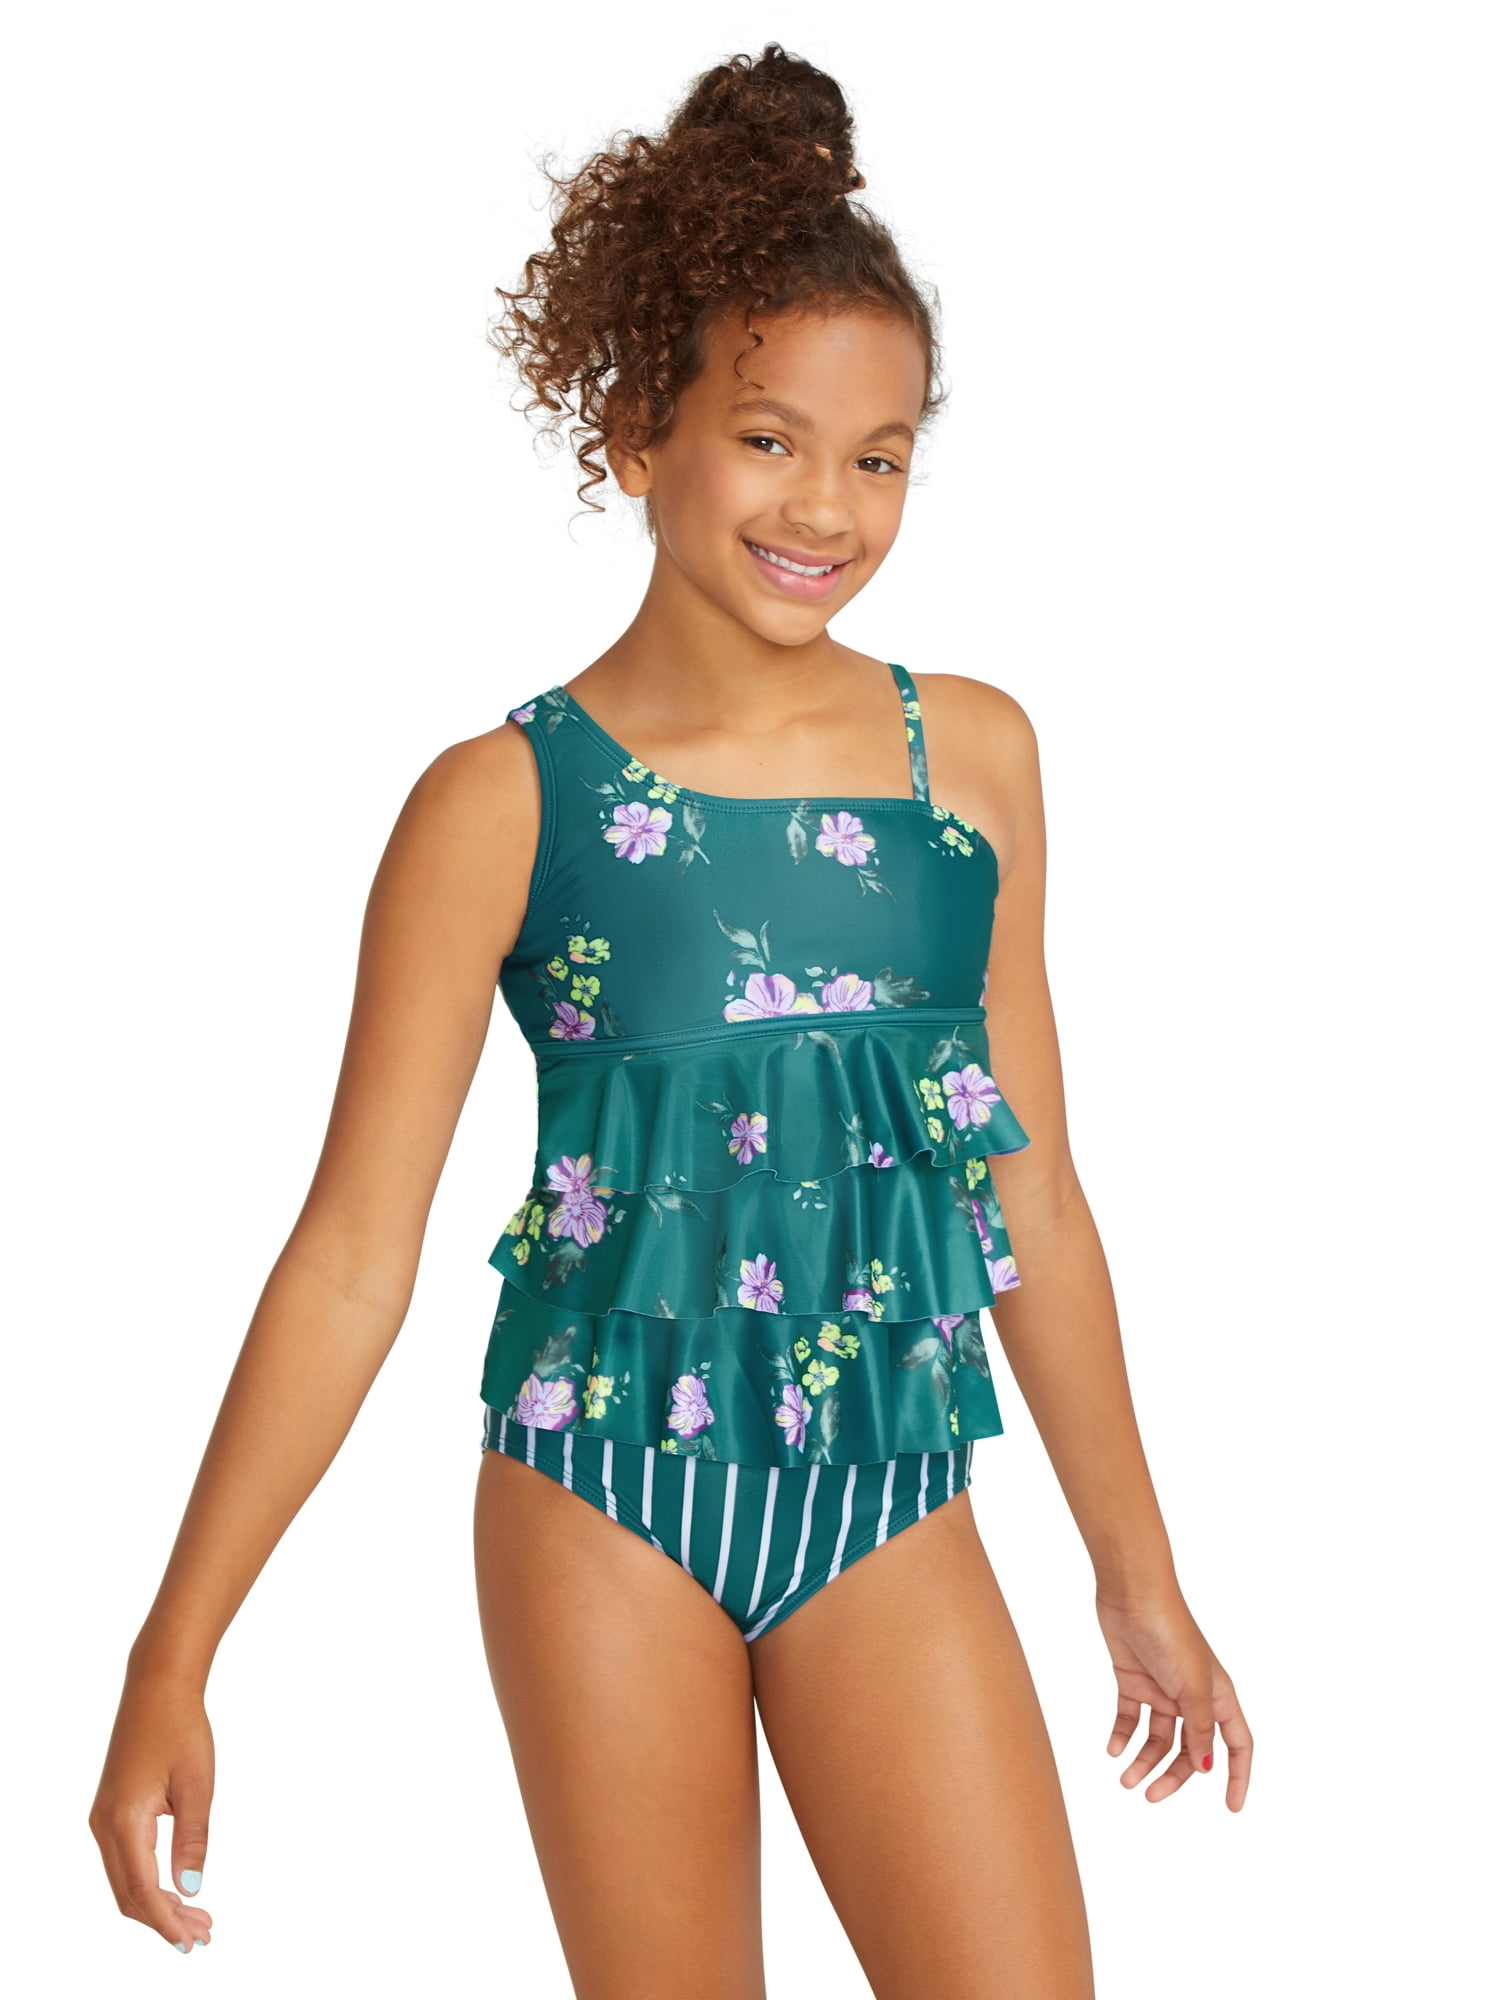 Girls One-piece Swimsuit 5 7 8 Swim suit 10 MERMAID 12 6 14 Swimwear Bathing Suit 6X Dance Leotard Gift for Grand-daughter